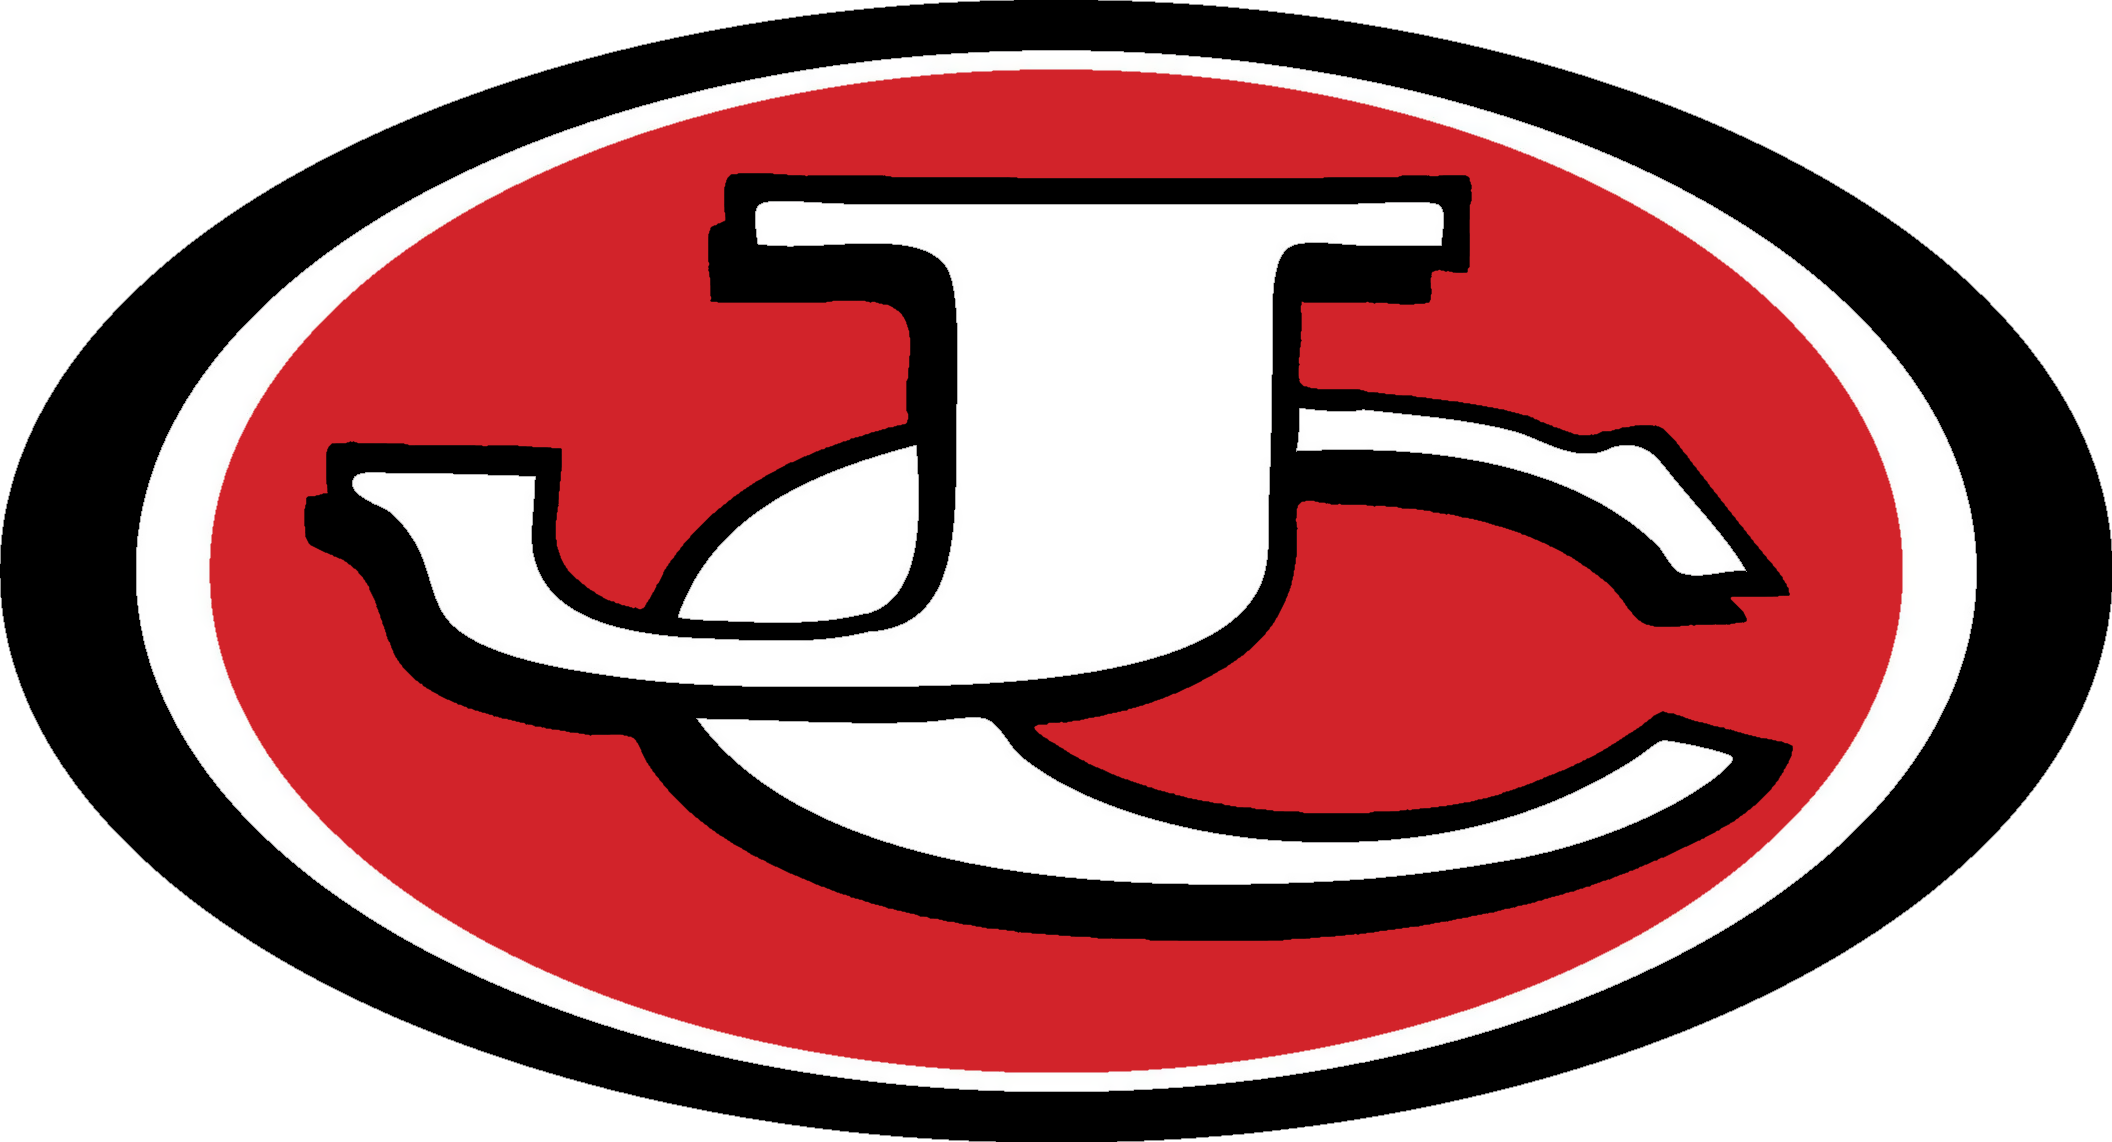 Jeff City logo